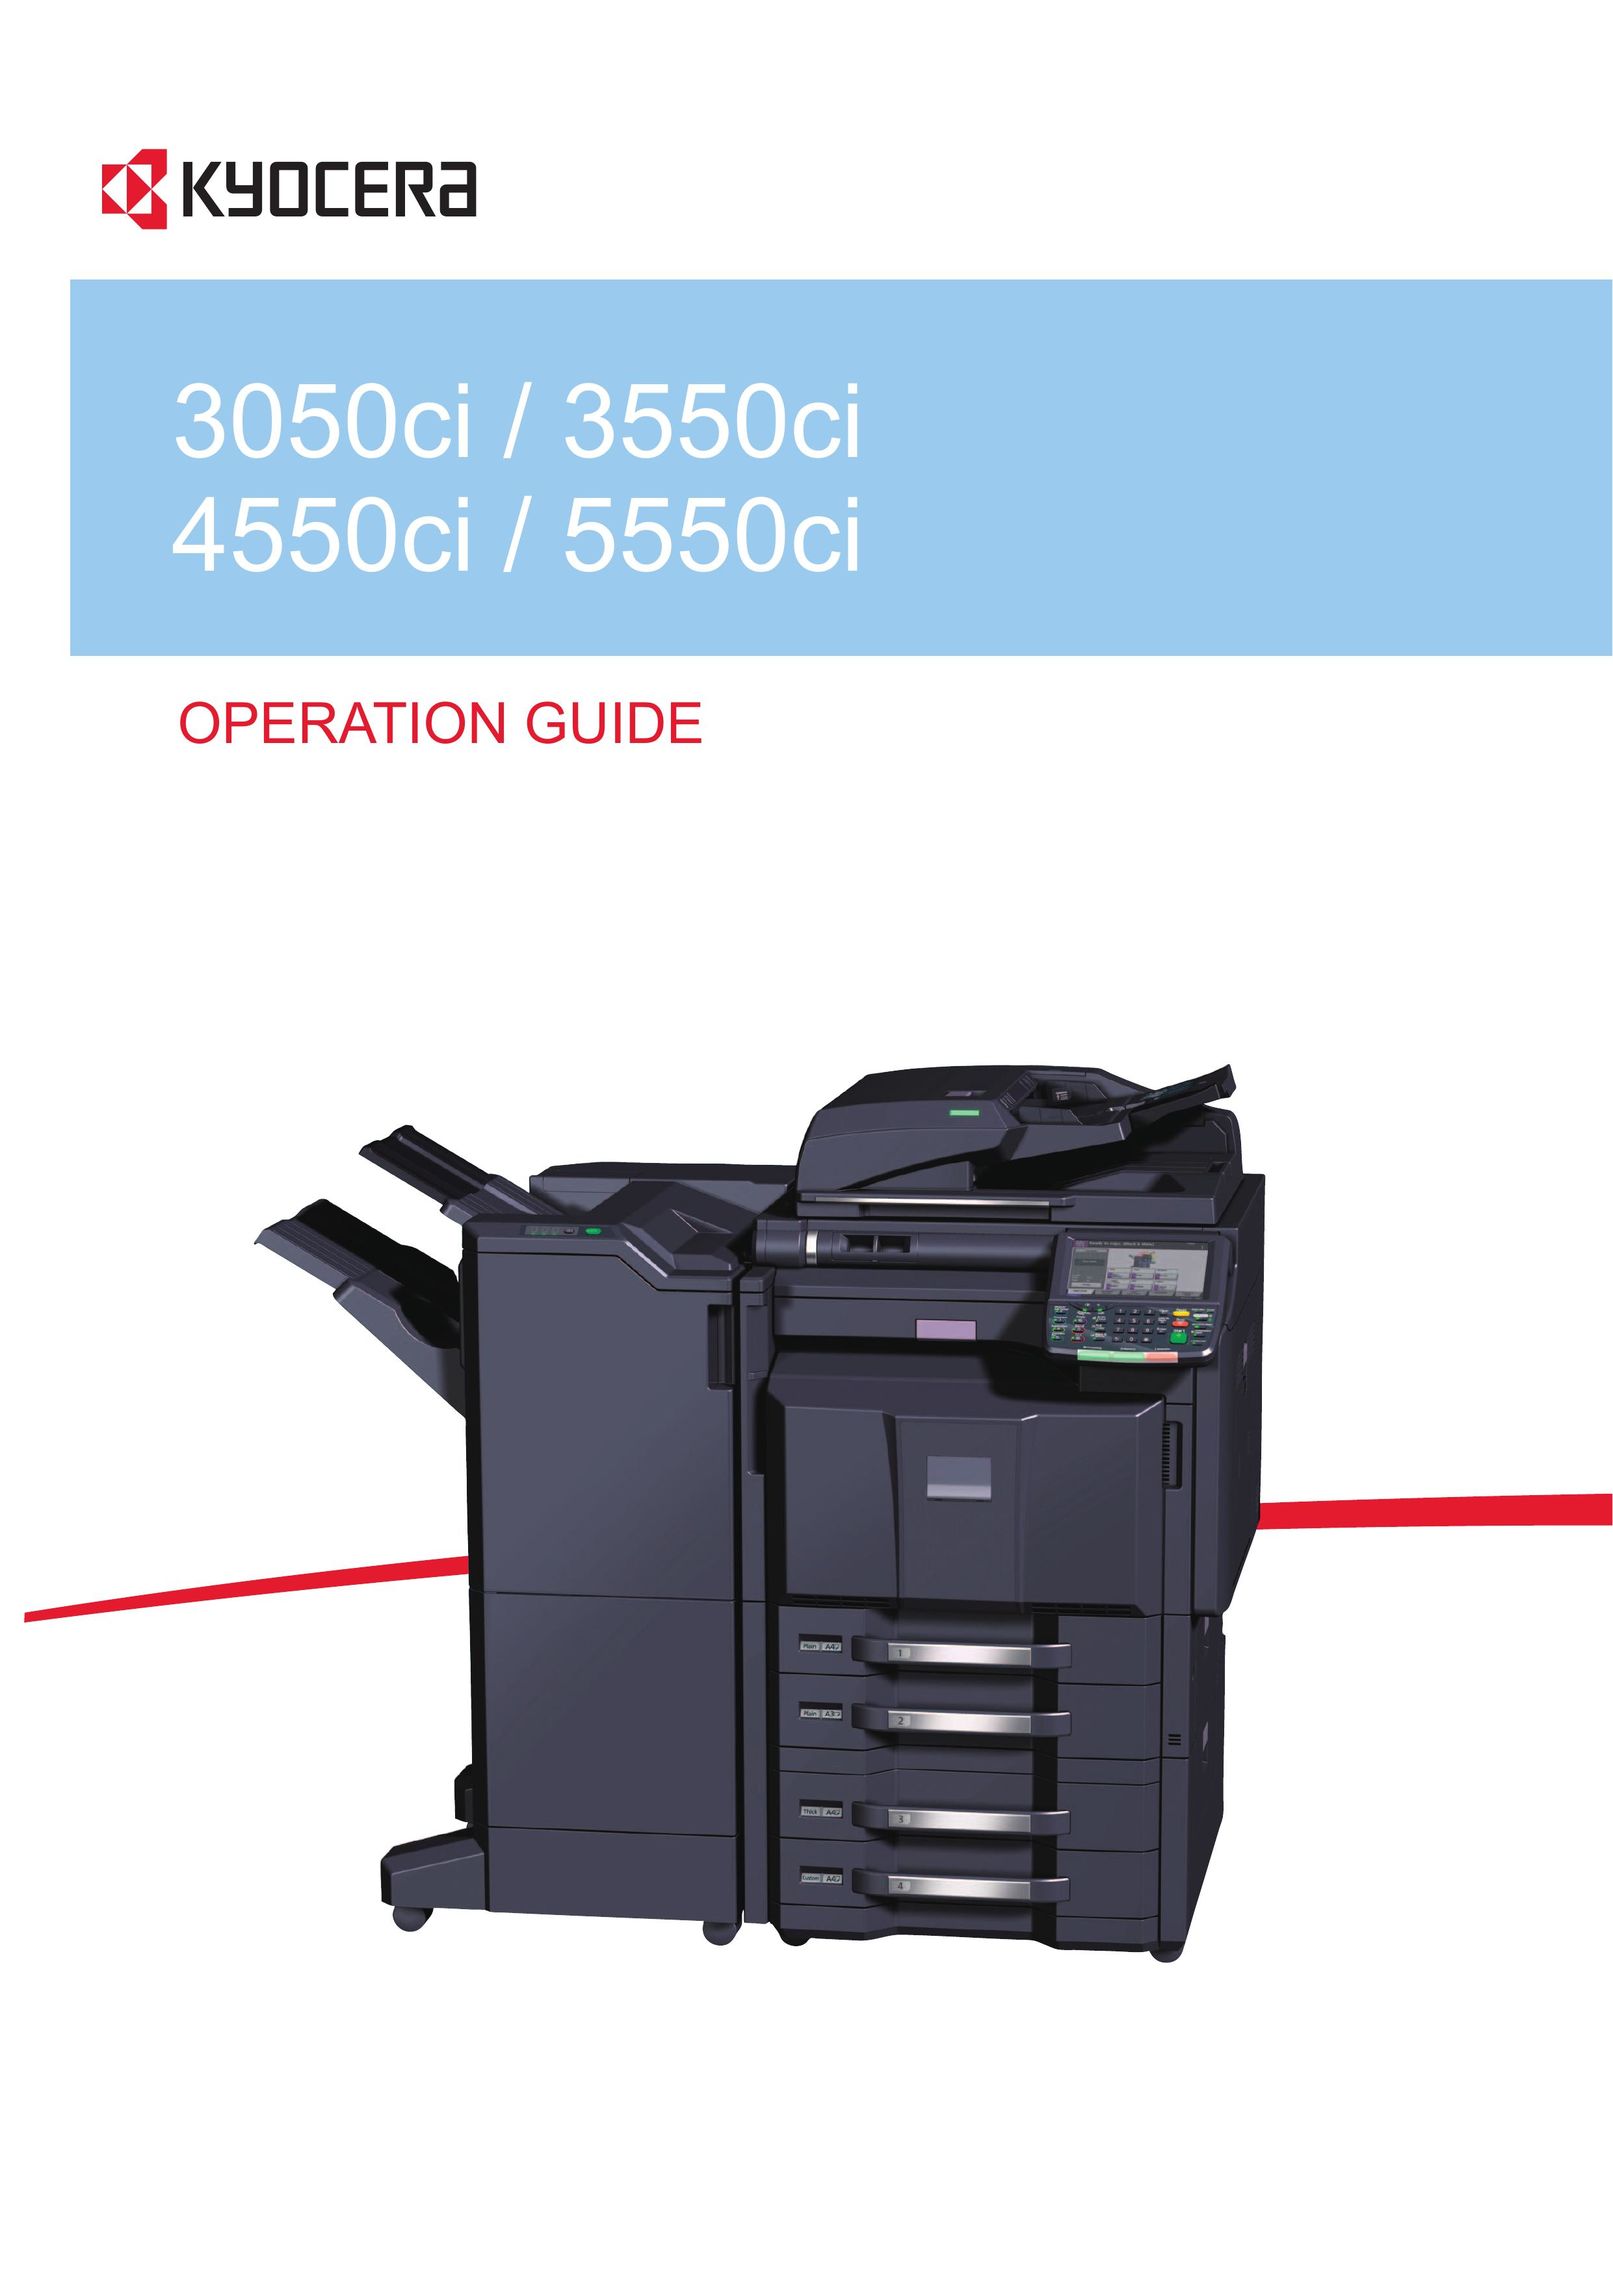 Kyocera 3050ci All in One Printer User Manual